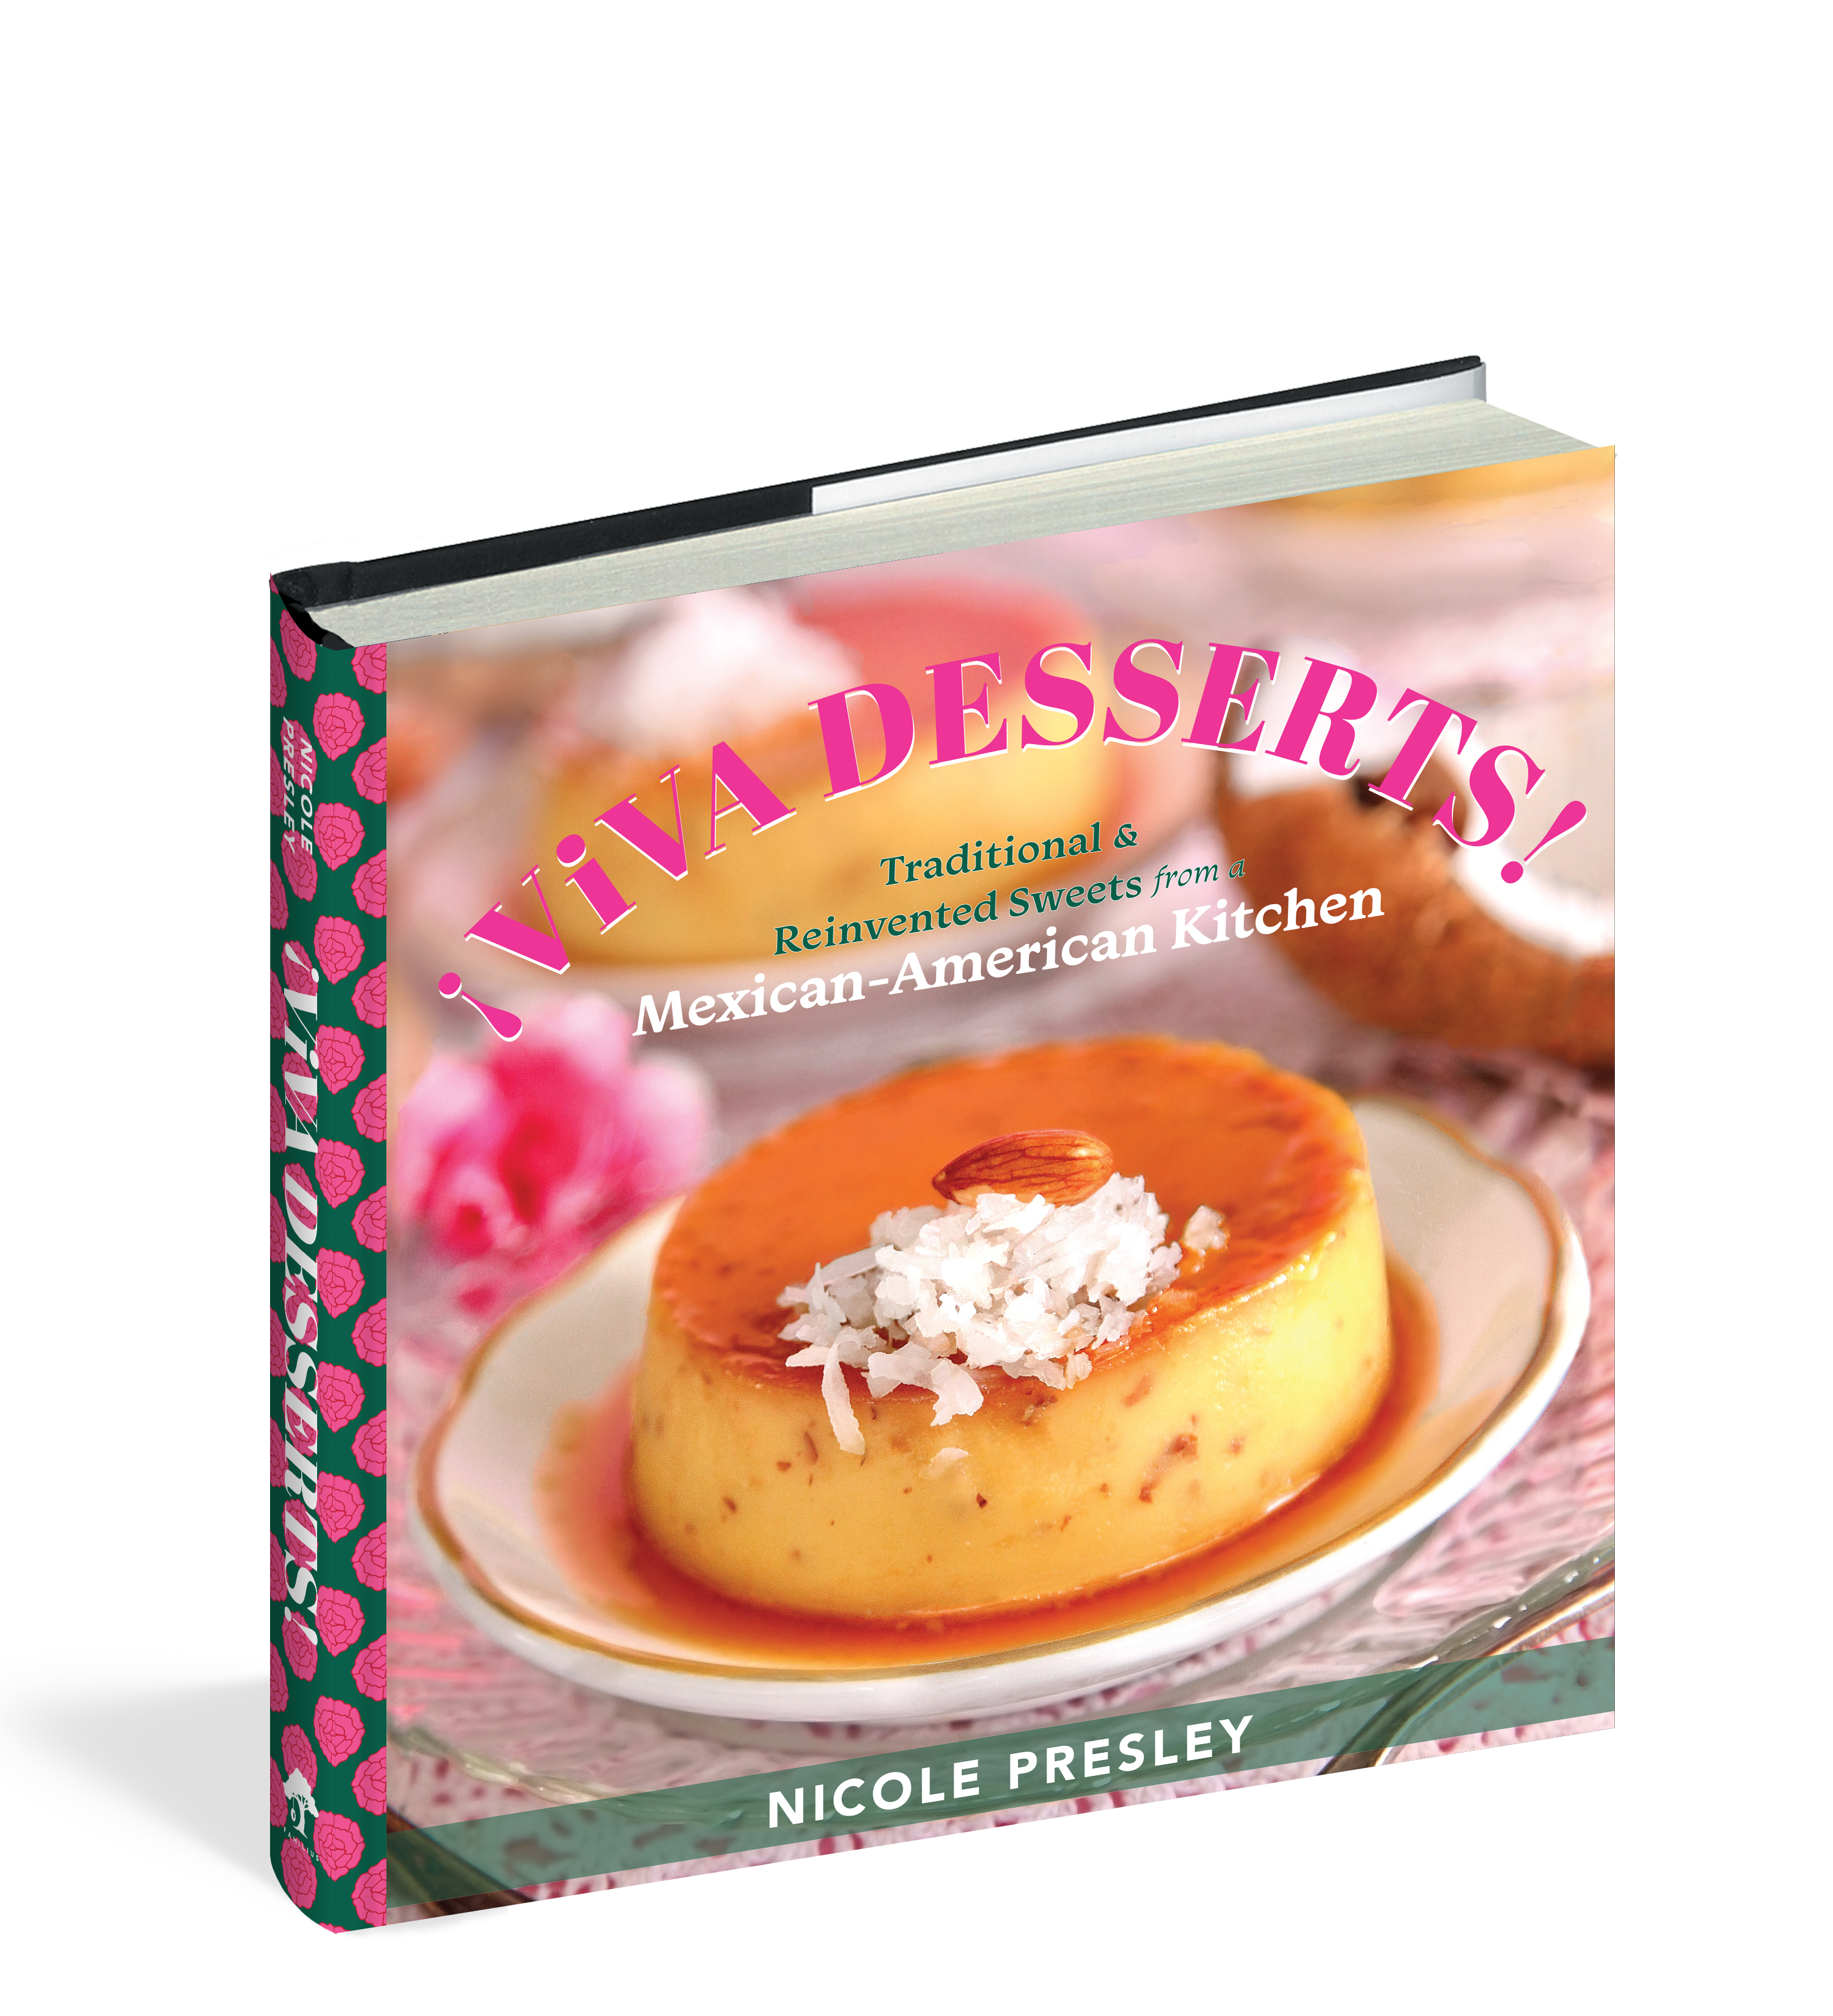 The cover of the cookbook ¡Viva Desserts!